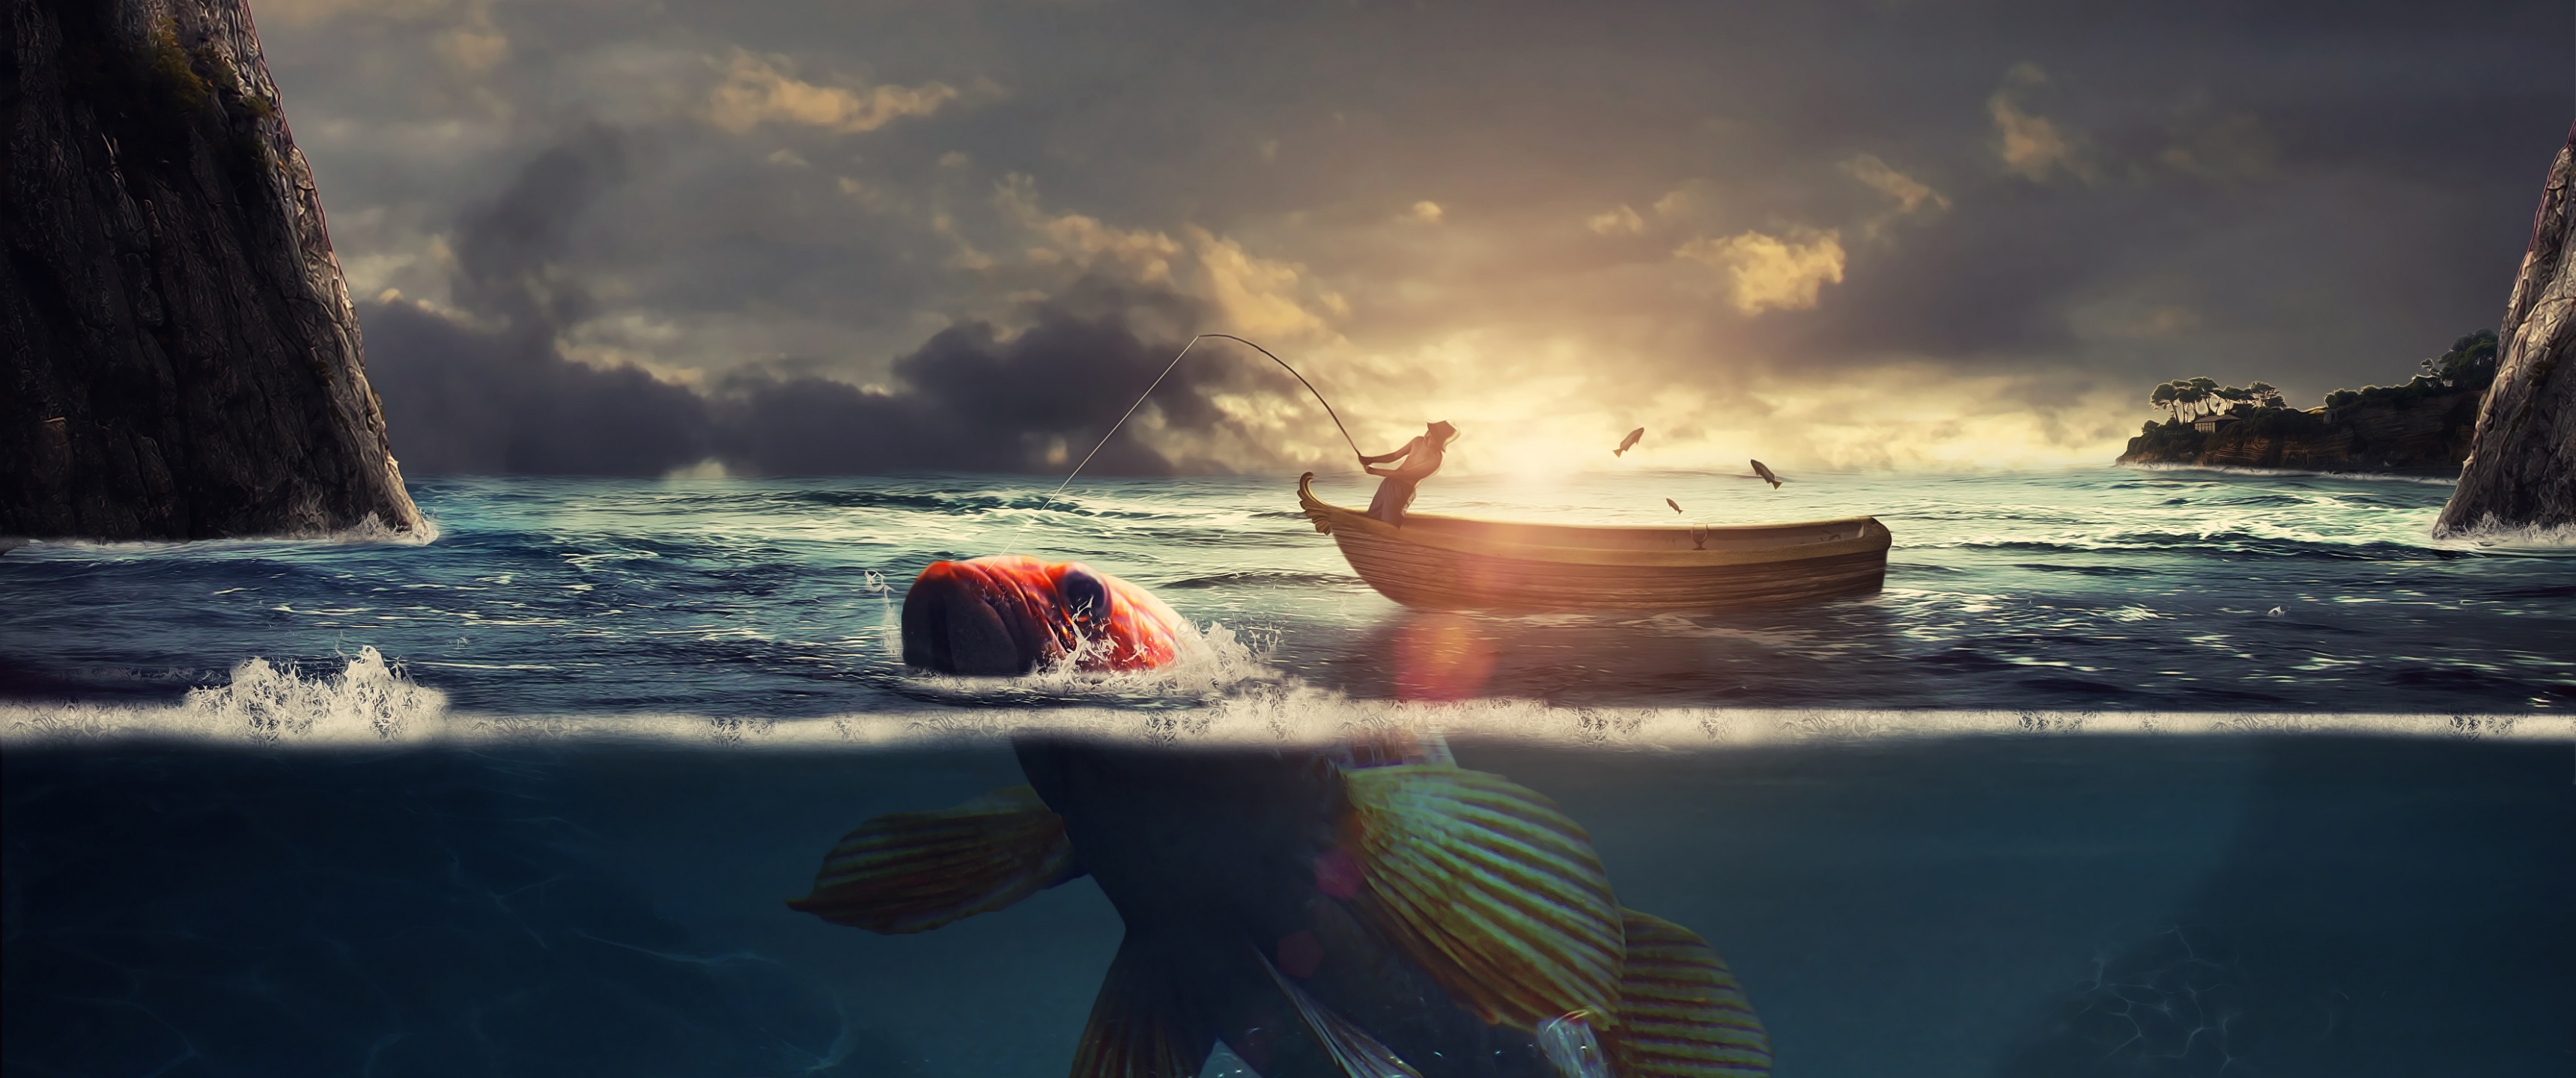 Surreal Wallpaper 4K, Fishing, Boat, Sea, Fantasy, #286